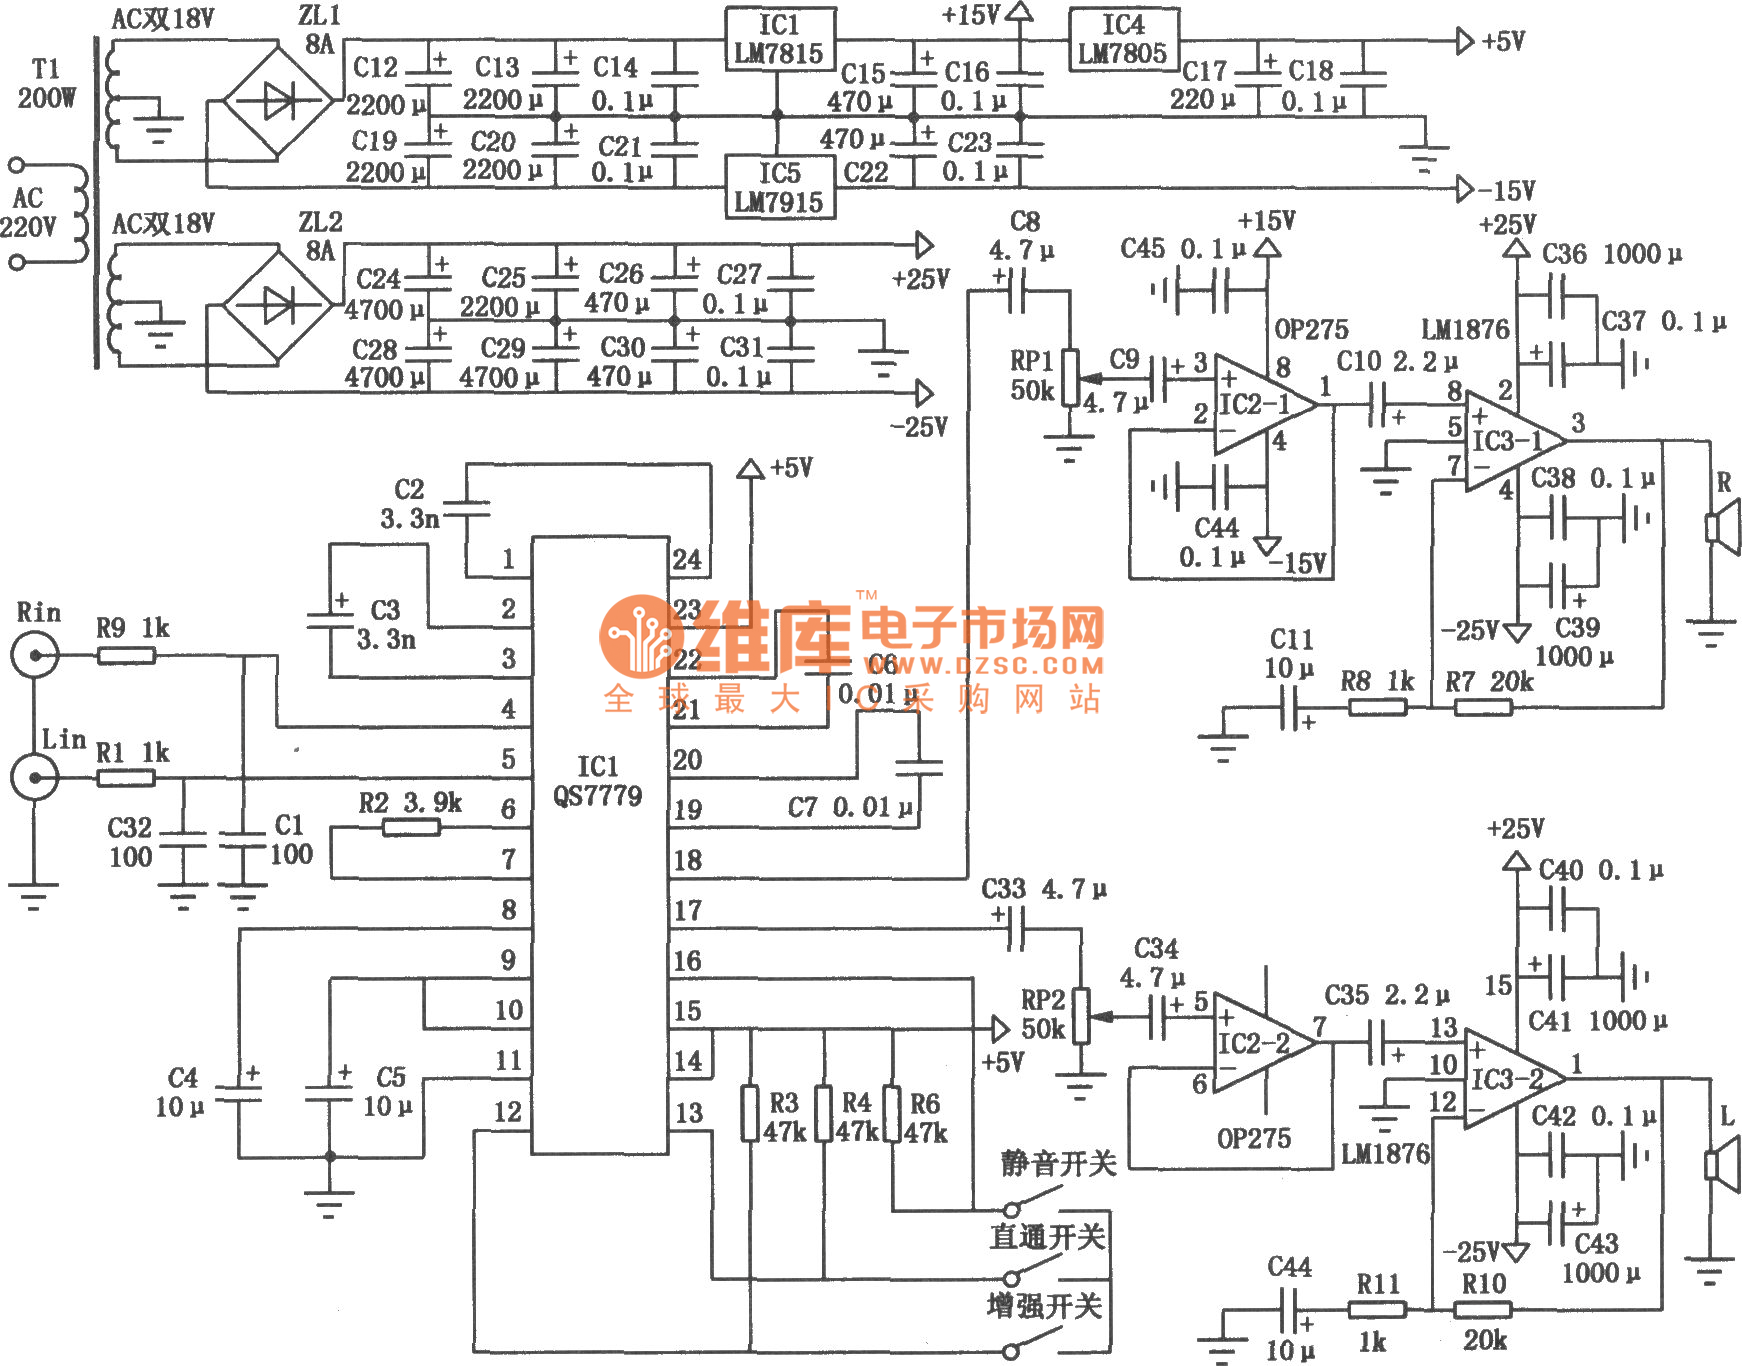 Dolby Circuit Diagram - Multimedia Hi Fi Power Amplifier Circuit - Dolby Circuit Diagram